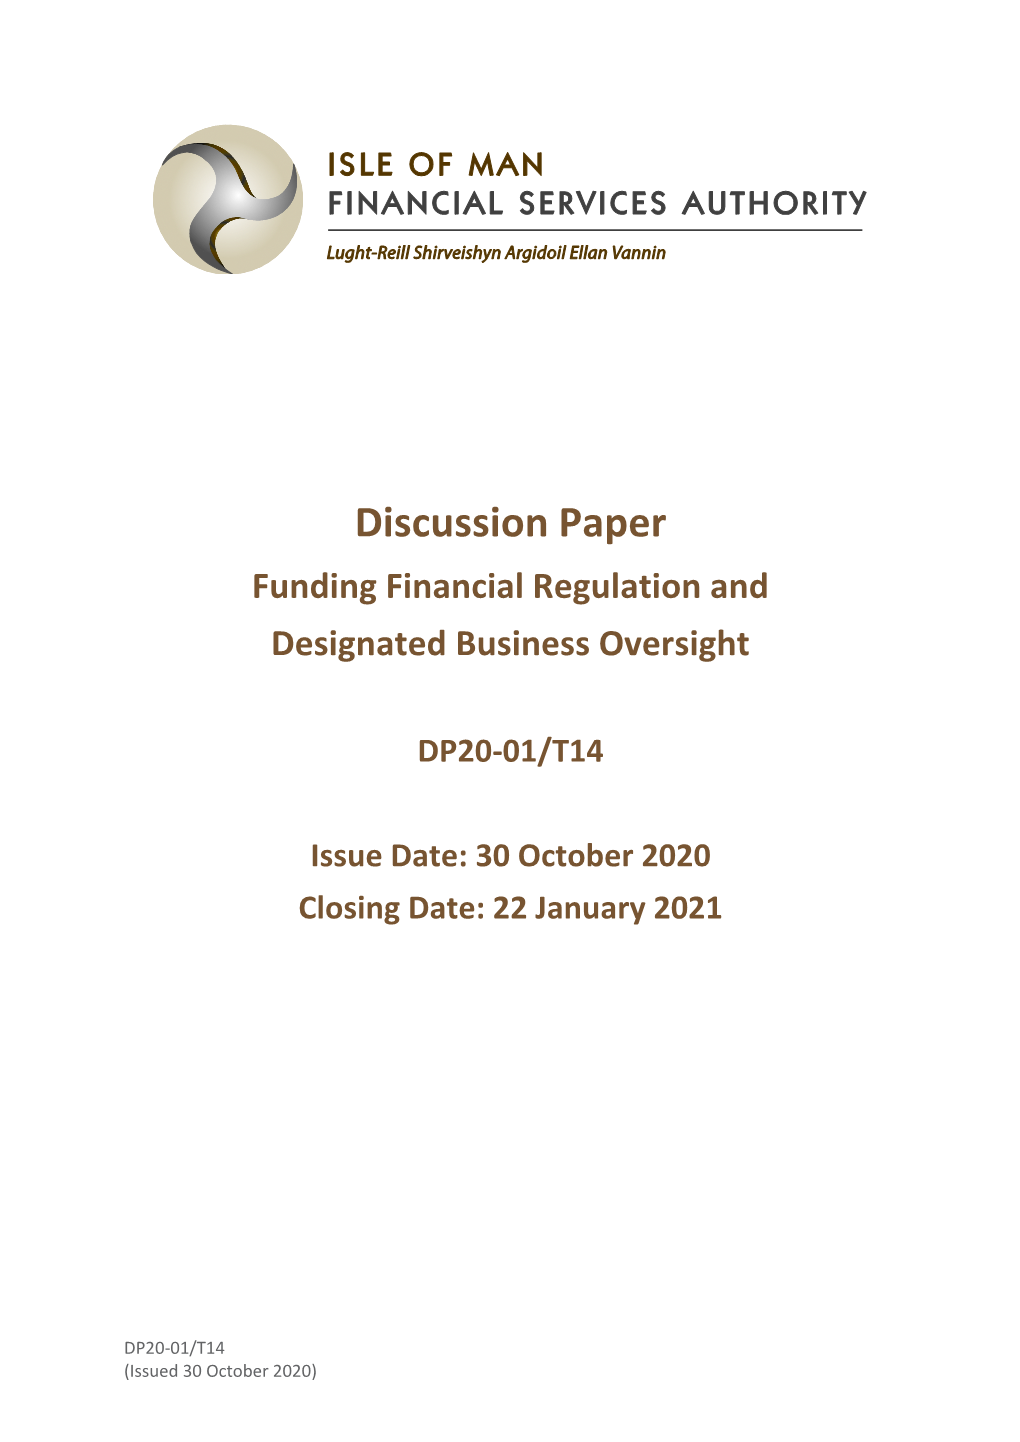 DP20-01/T14 Funding Regulation and Oversight